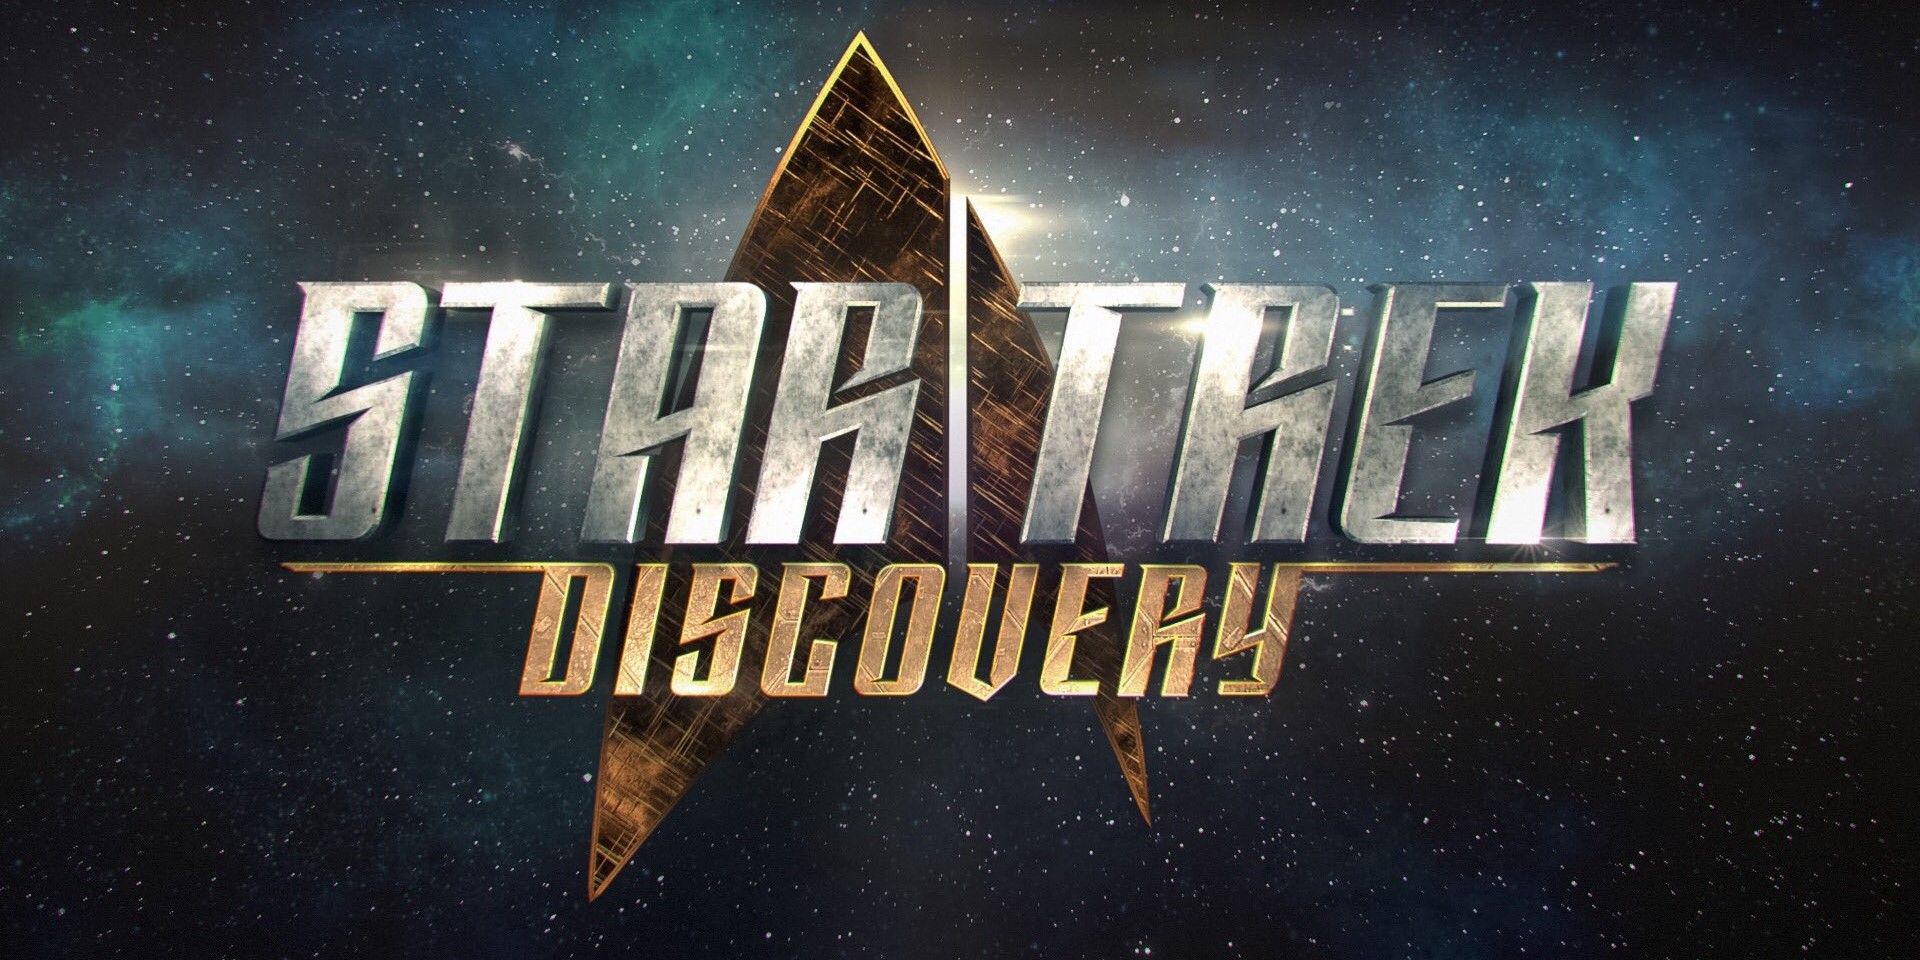 Star Trek: Discovery logo and trailer